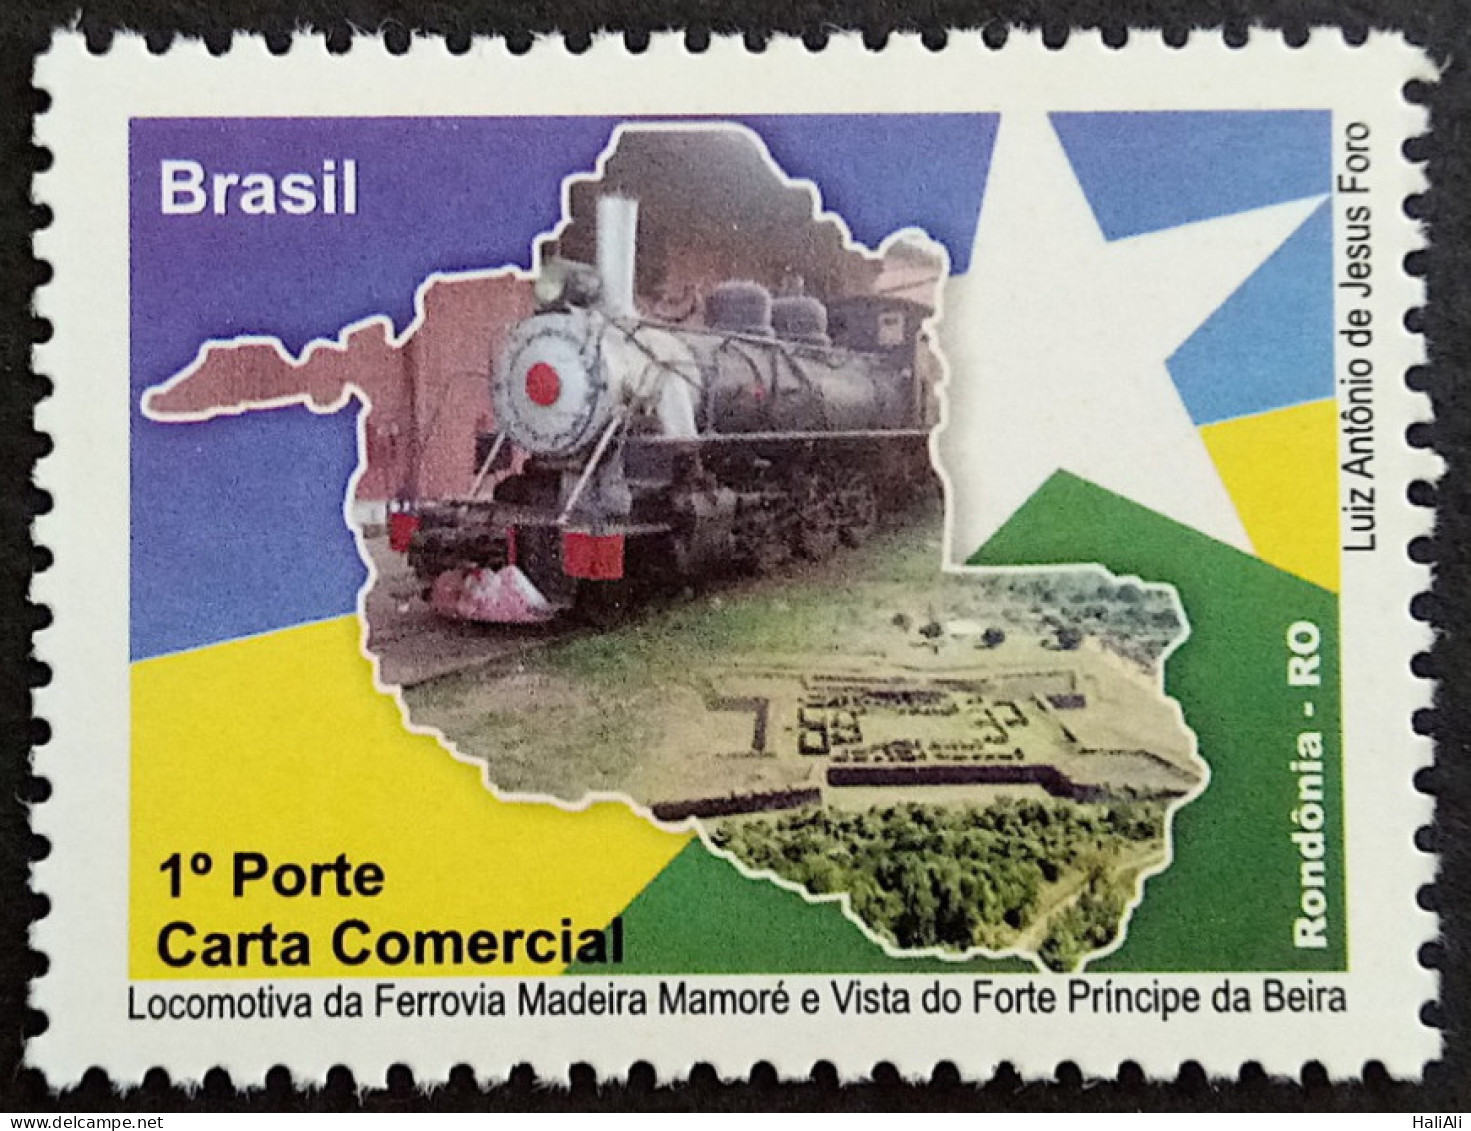 C 2926 Brazil Depersonalized Stamp Tourism Rondonia Train Map Flag Star 2009 - Personalizzati